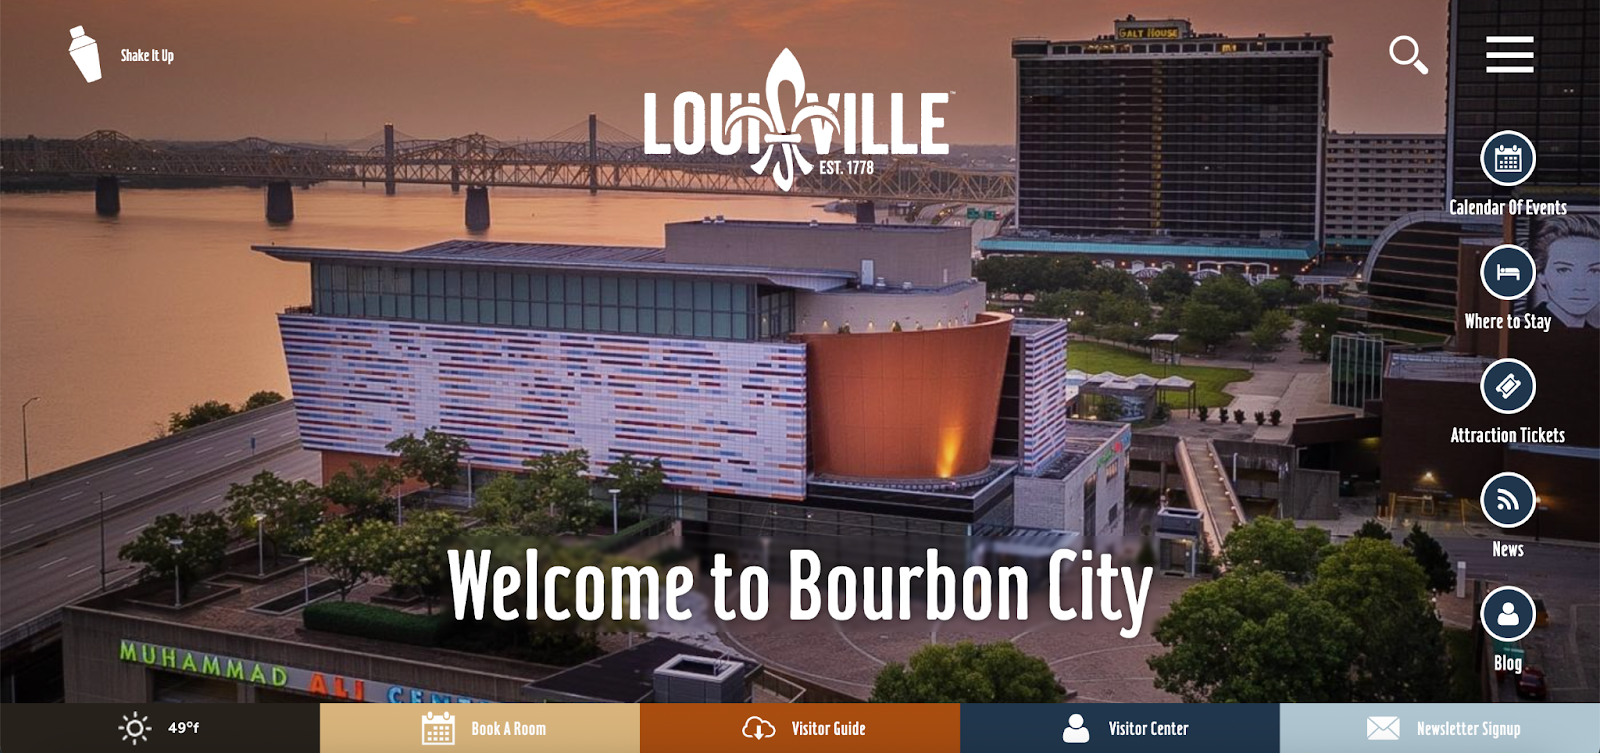 Louisville Tourism & Events